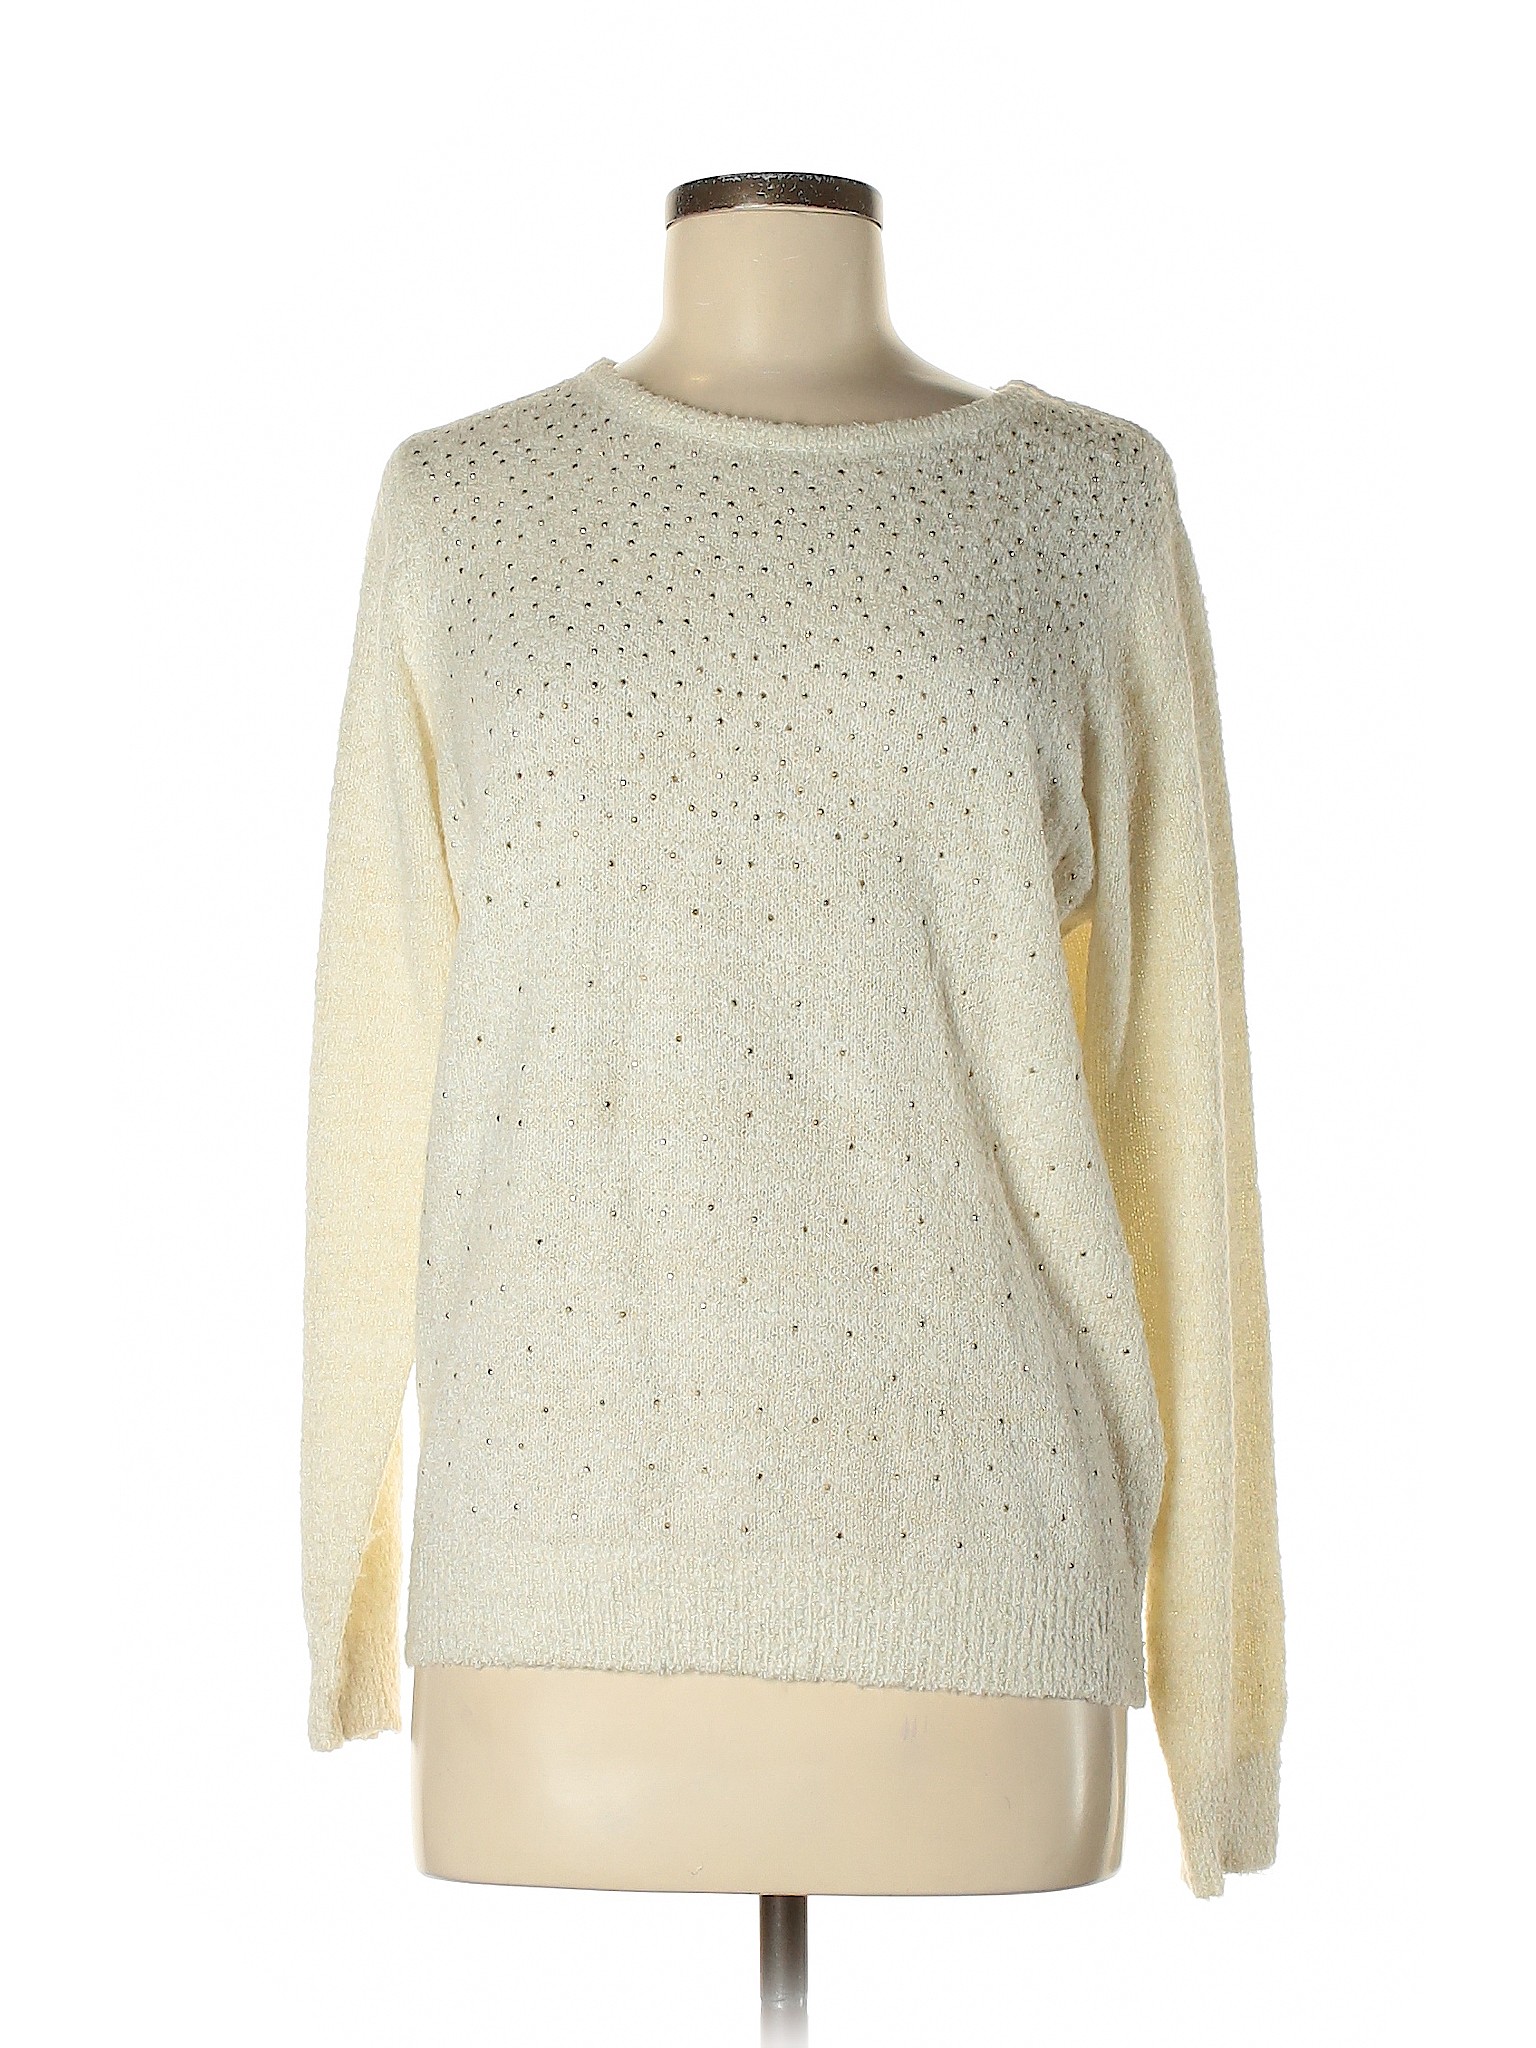 Cathy Daniels Women Ivory Pullover Sweater M | eBay